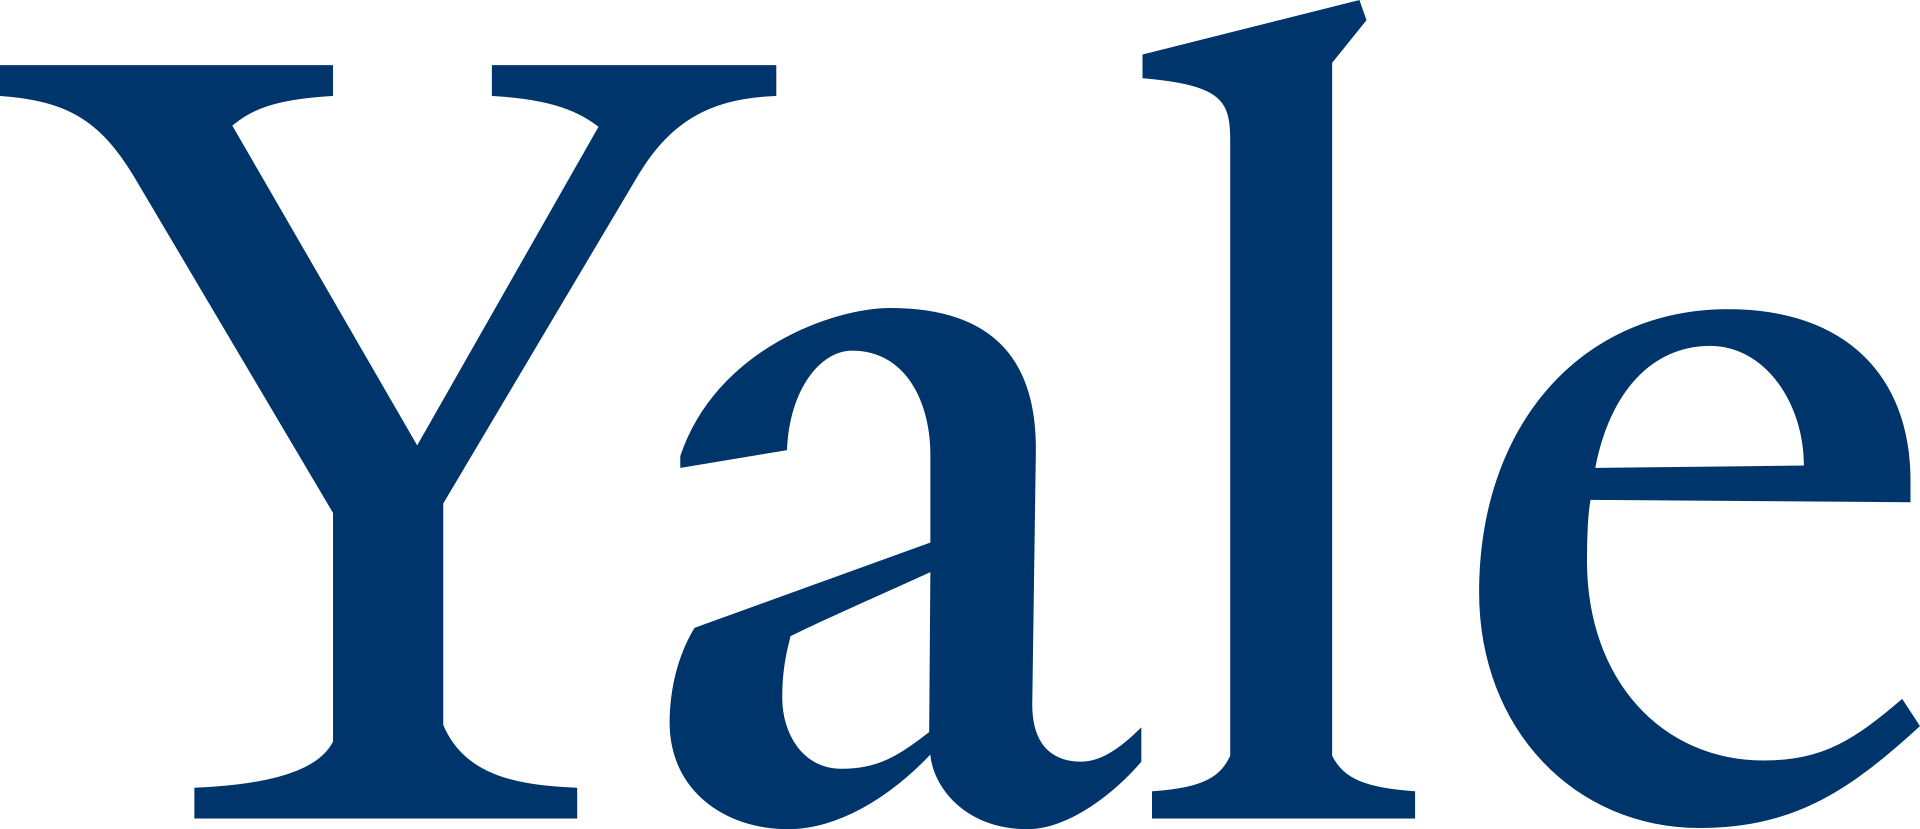 耶鲁大学 logo, By 耶鲁大学 - http://身份.耶鲁大学.edu/耶鲁大学-logo-wordmarks，公共领域，http://commons.维基.org/w/index.php?curid = 37348190 "